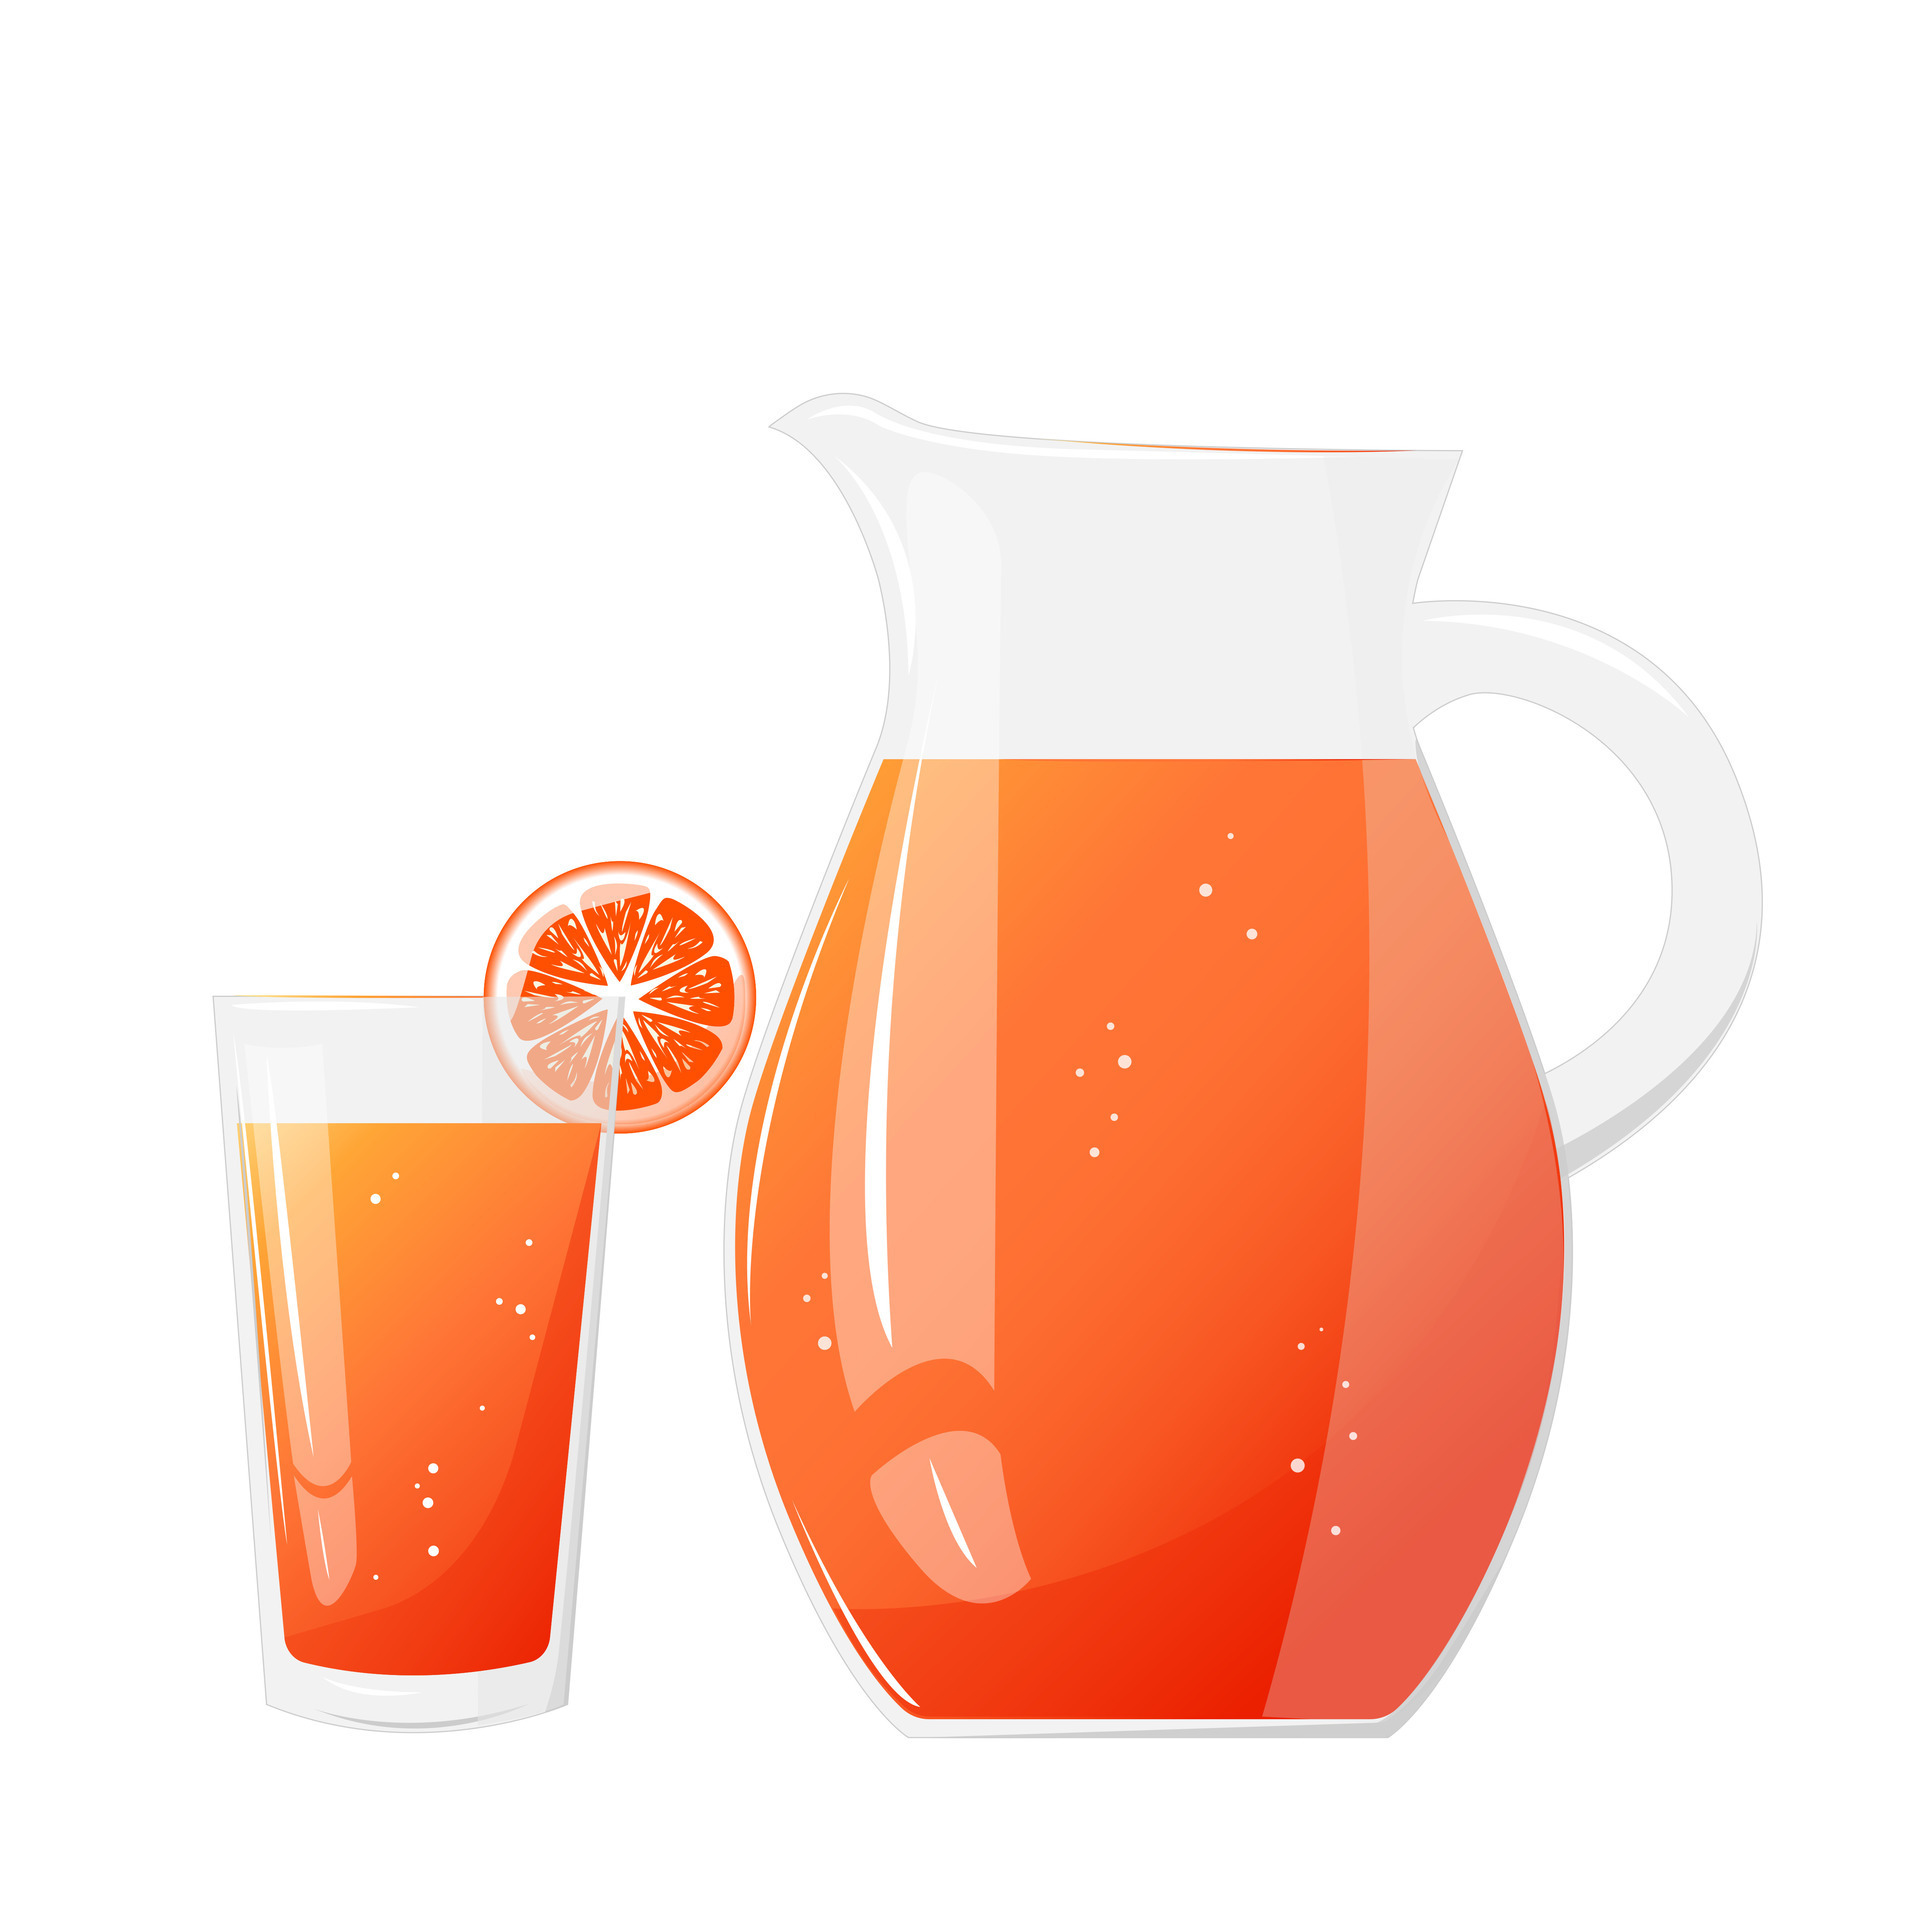 Lemonade juice jug and glass with orange fruit. Refreshing drink